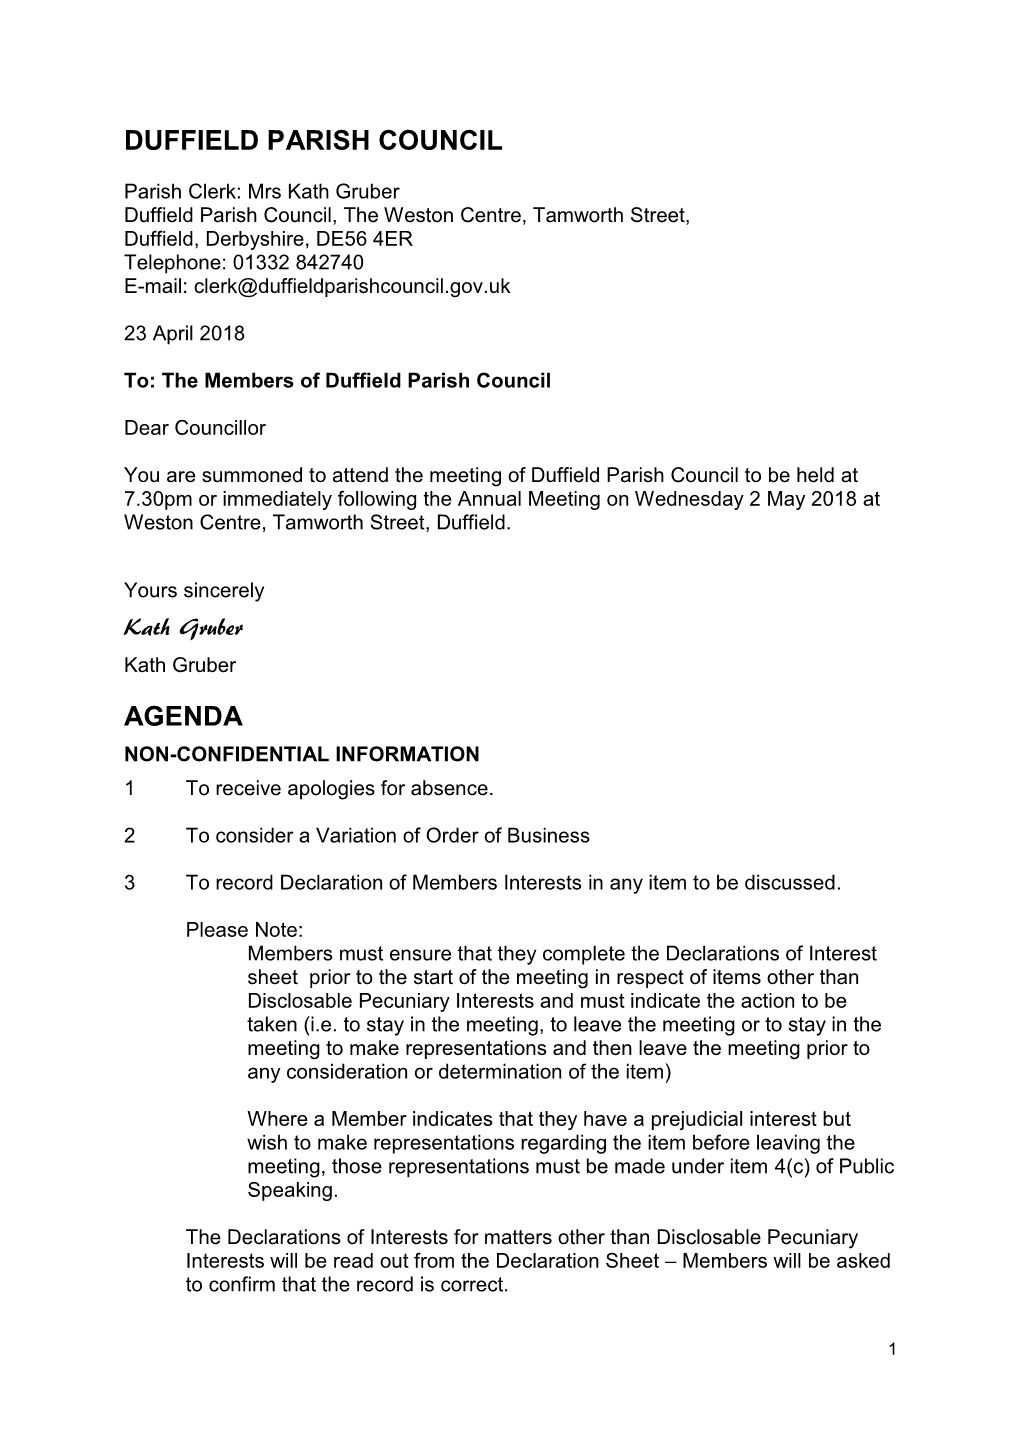 Duffield Parish Council Agenda